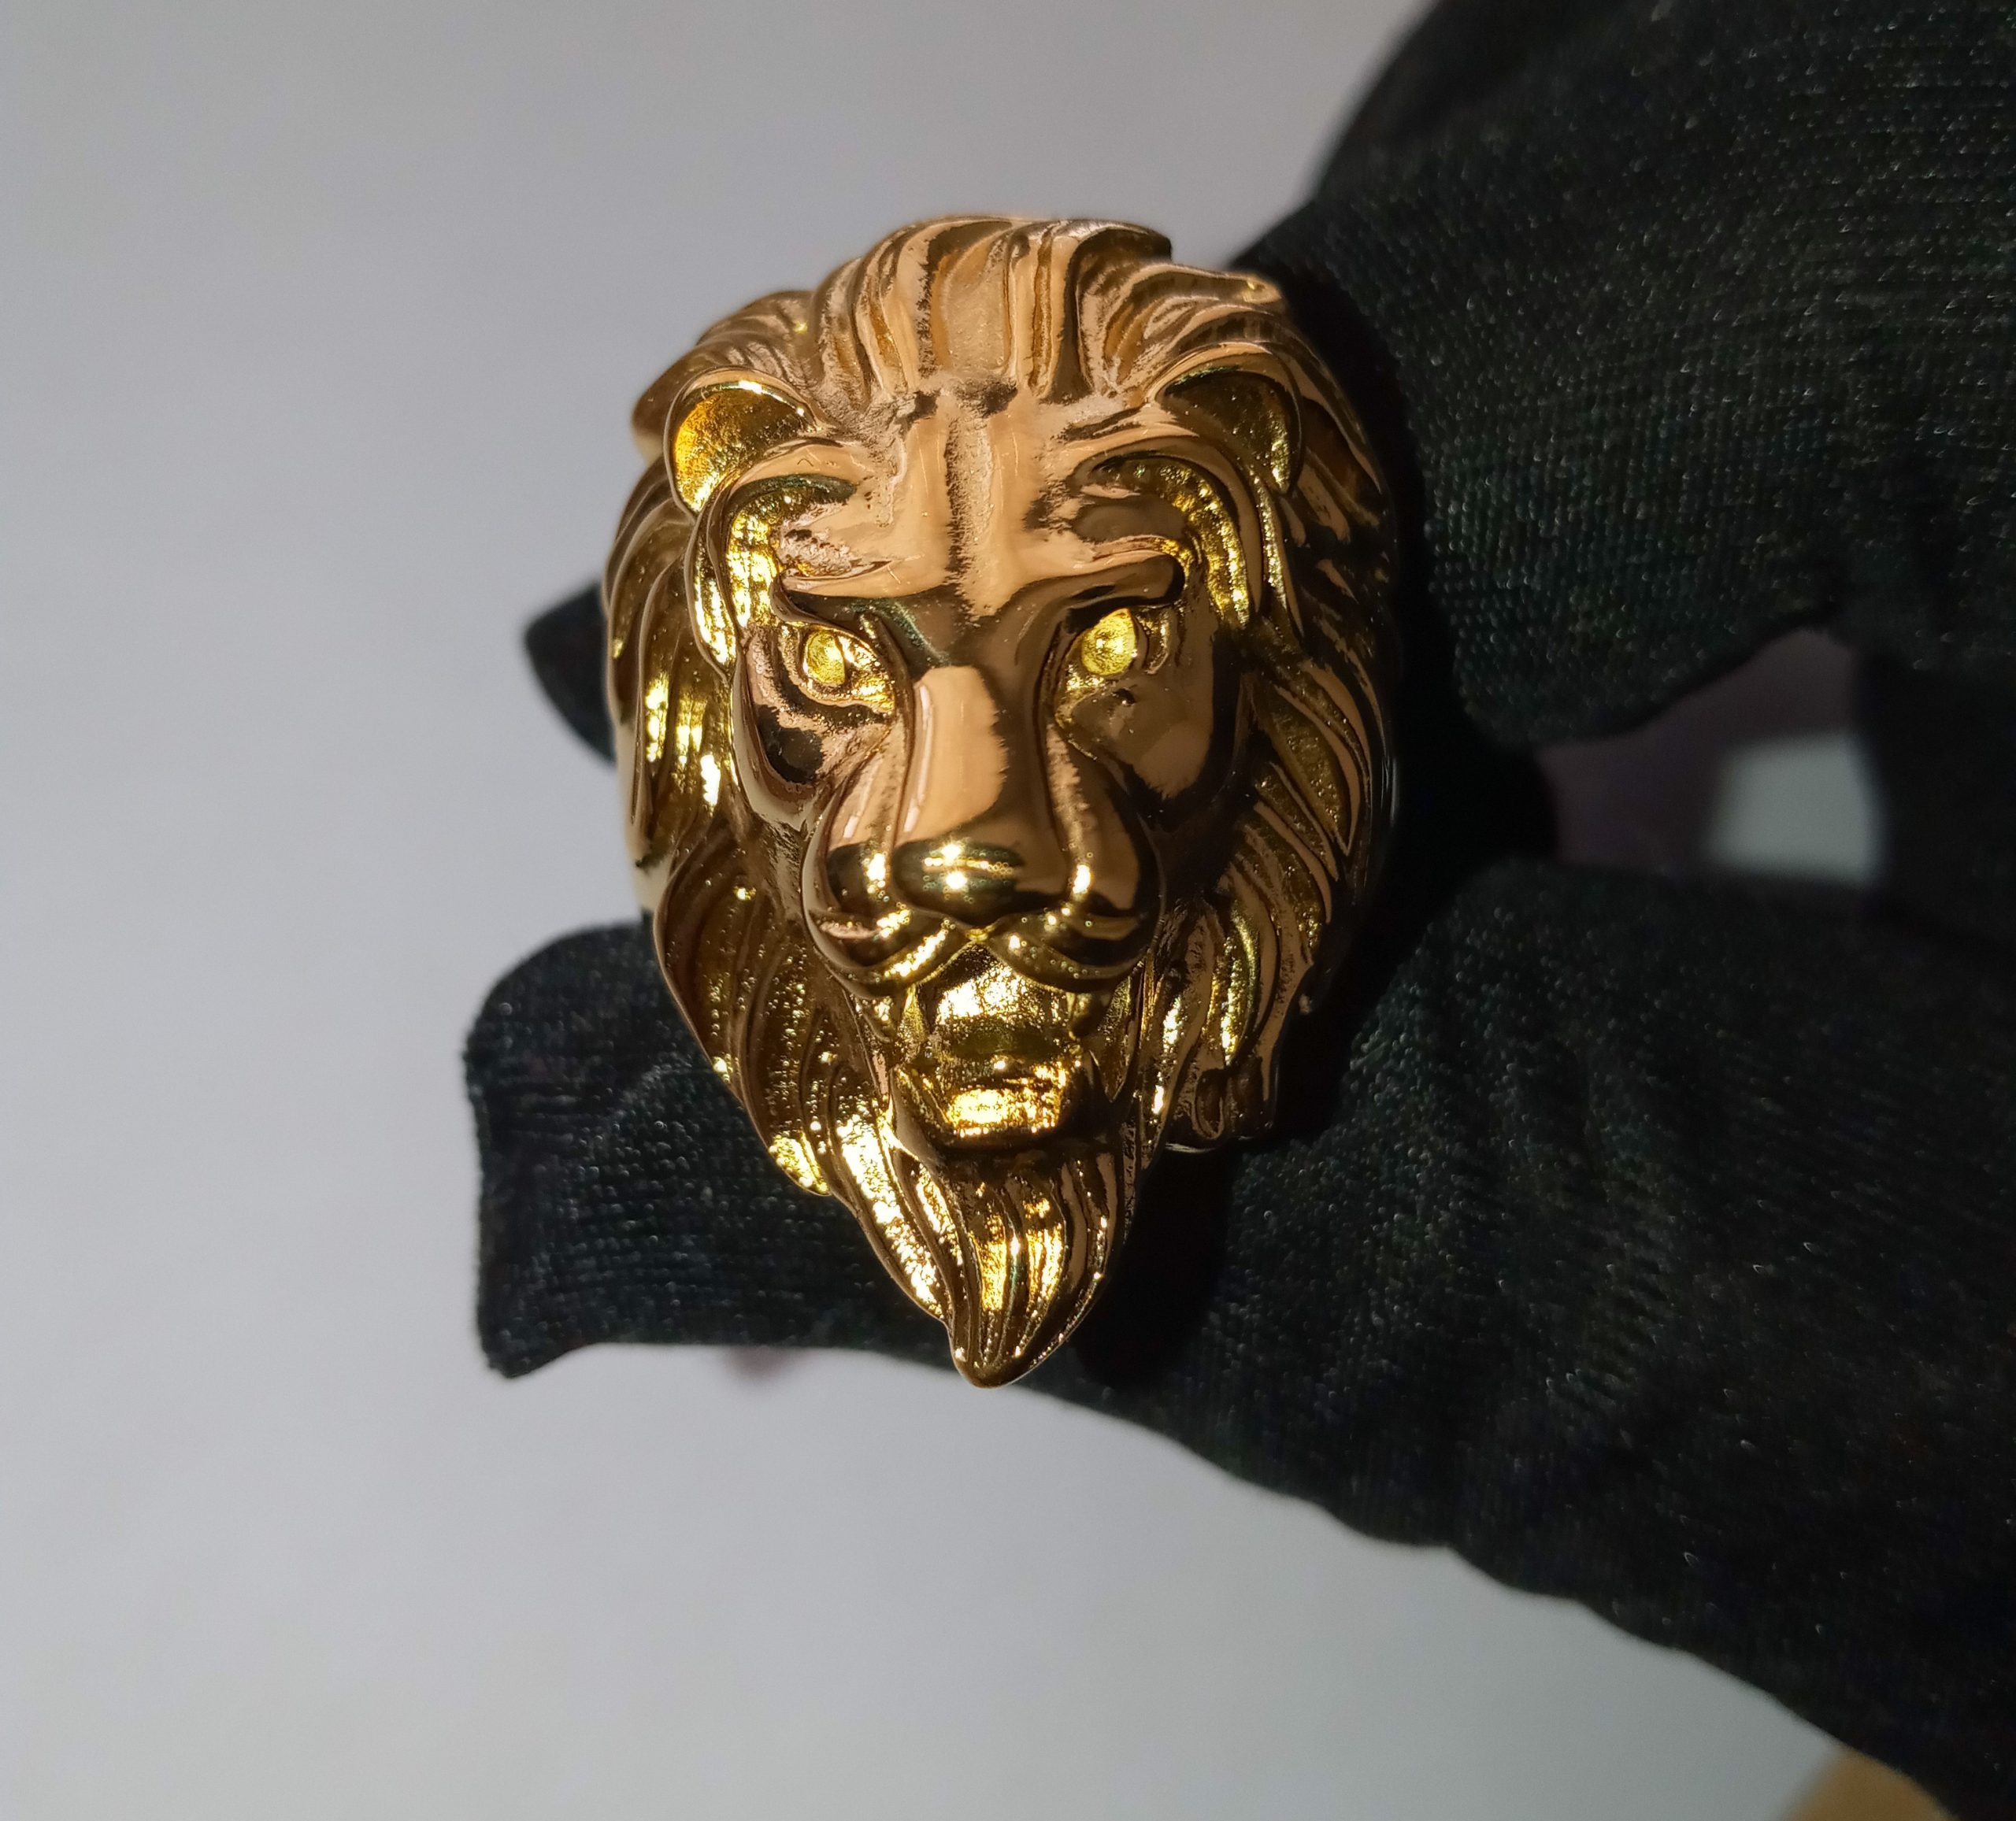 Gold Lion ring with menorahs